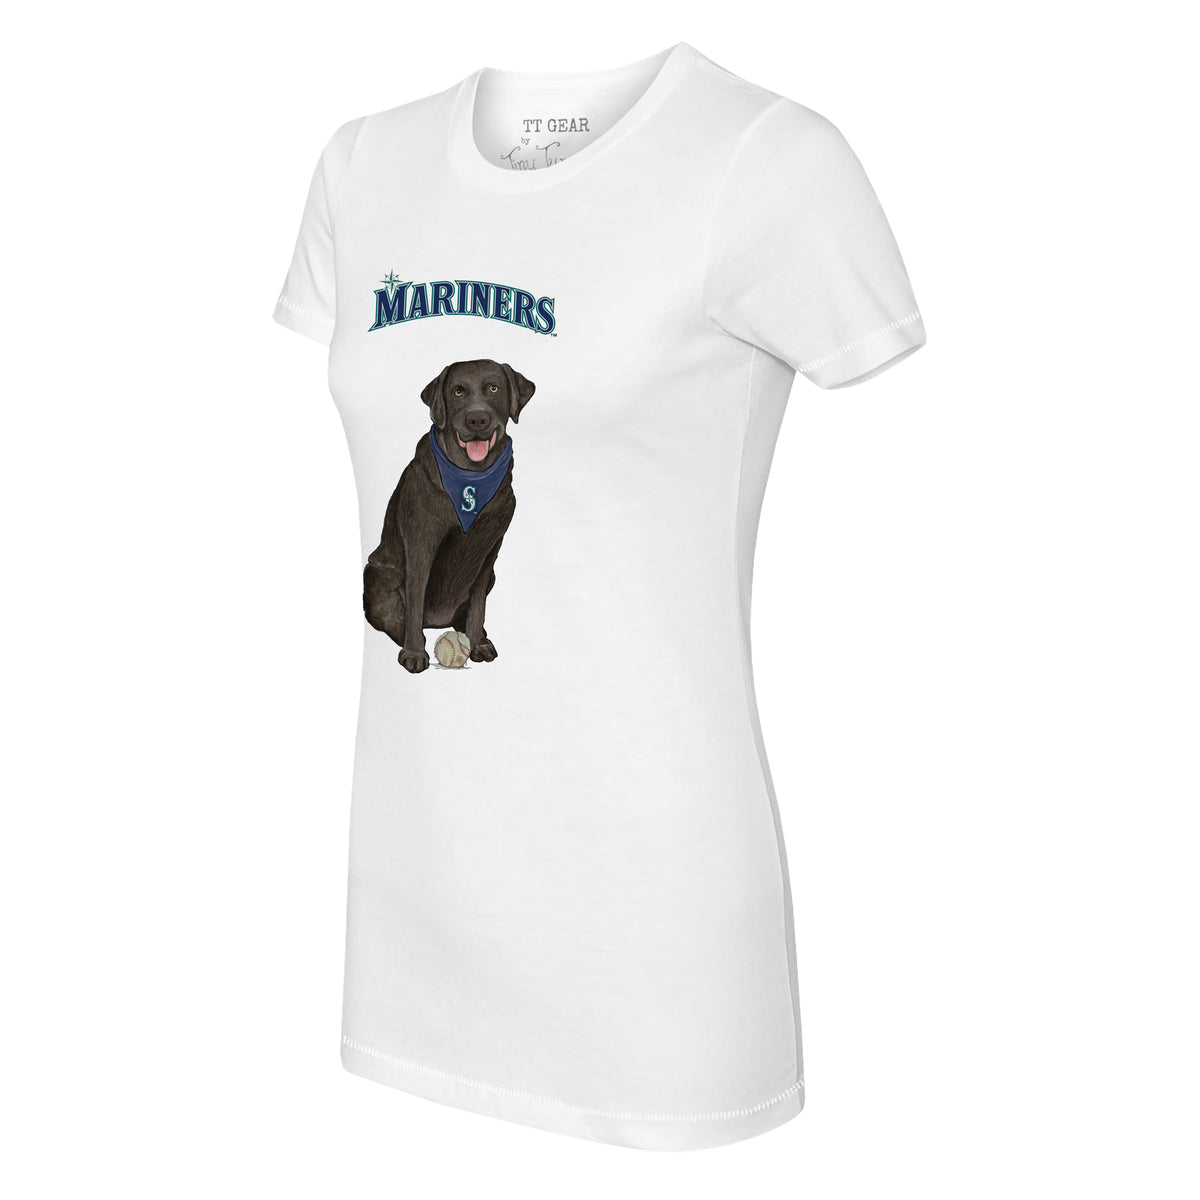 Seattle Mariners Black Labrador Retriever Tee Shirt